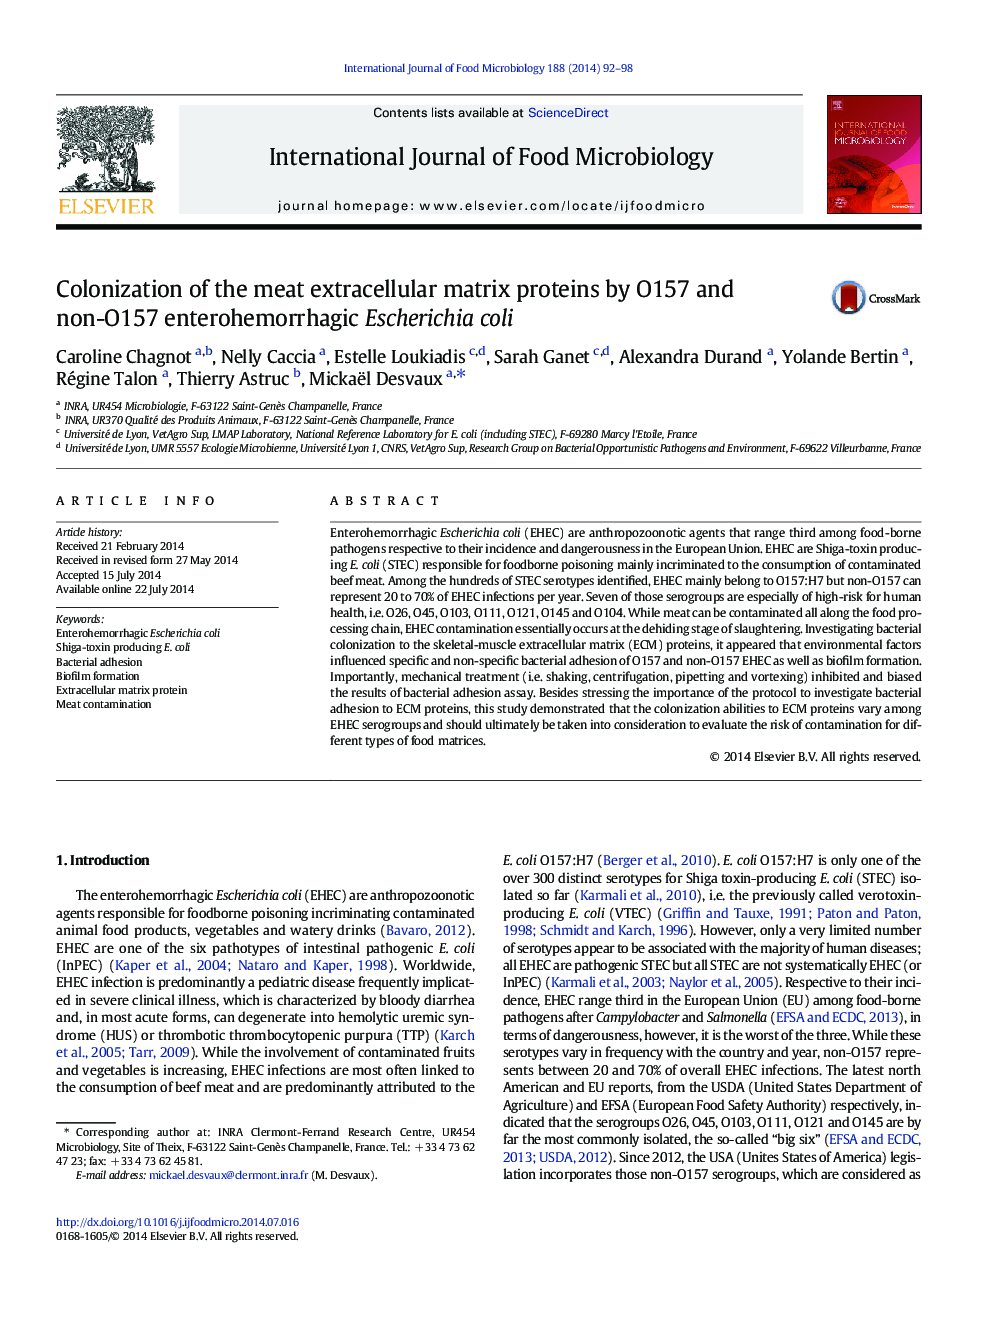 Colonization of the meat extracellular matrix proteins by O157 and non-O157 enterohemorrhagic Escherichia coli